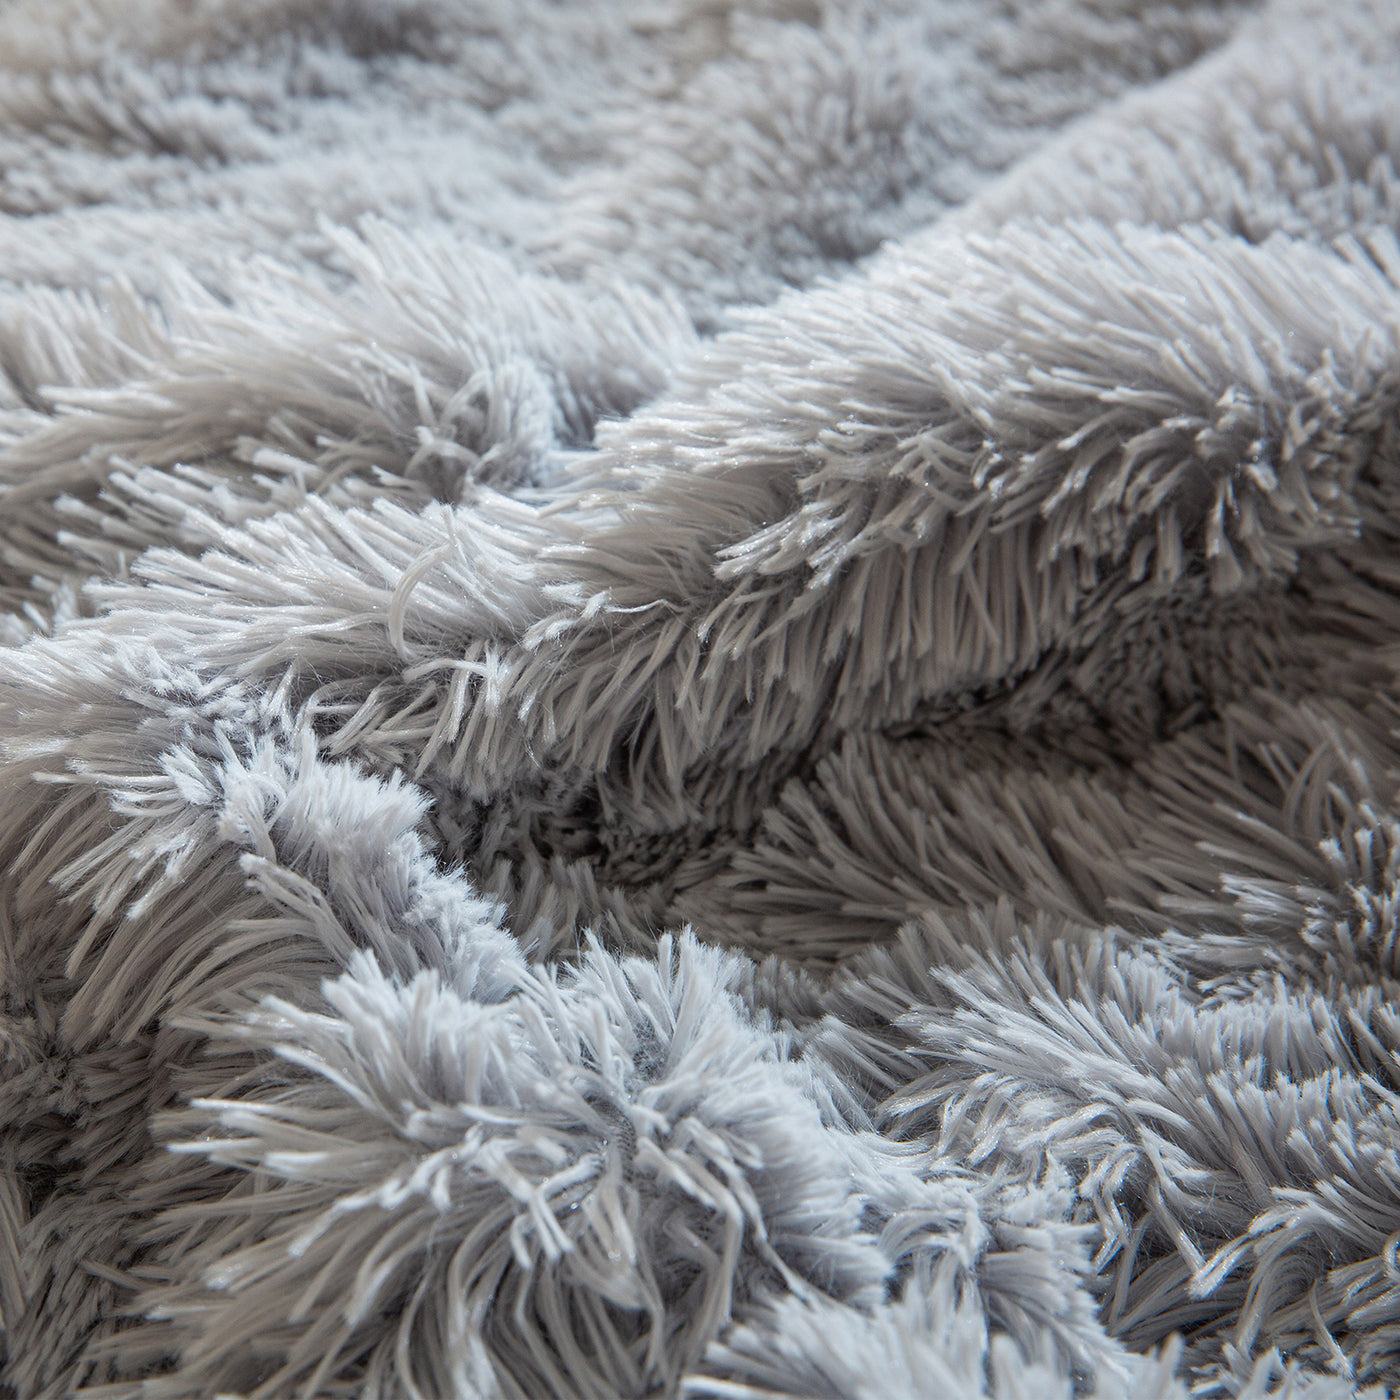 MAXYOYO Bean Bag Folding Floor Sofa Bed, Faux Fur Foam Filling Wall Couch Sleeper Chairs, Grey